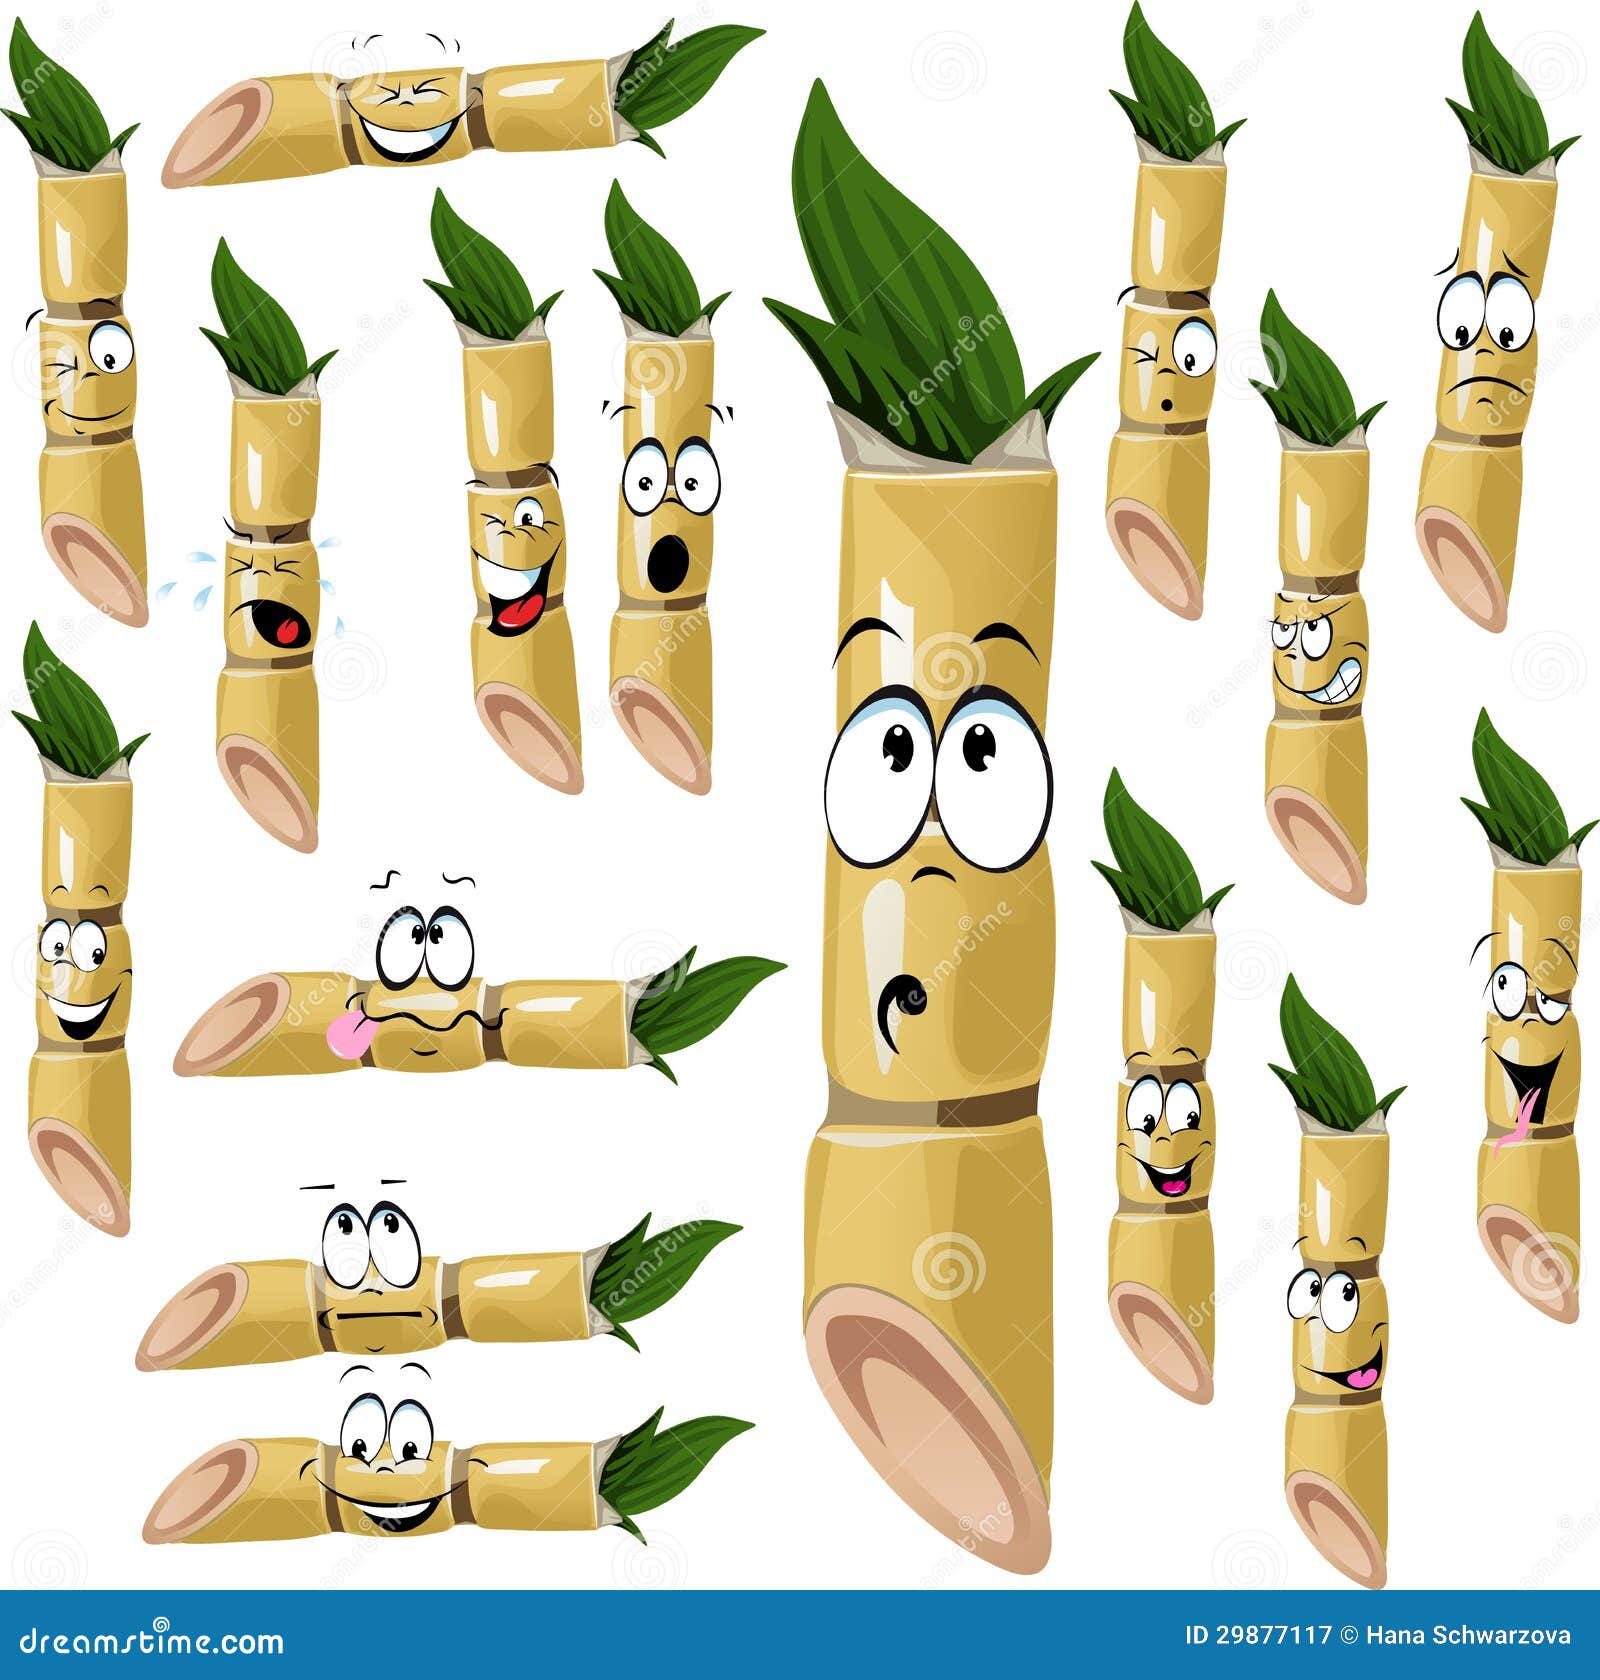 Sugarcane cartoon stock vector. Illustration of frown - 29877117